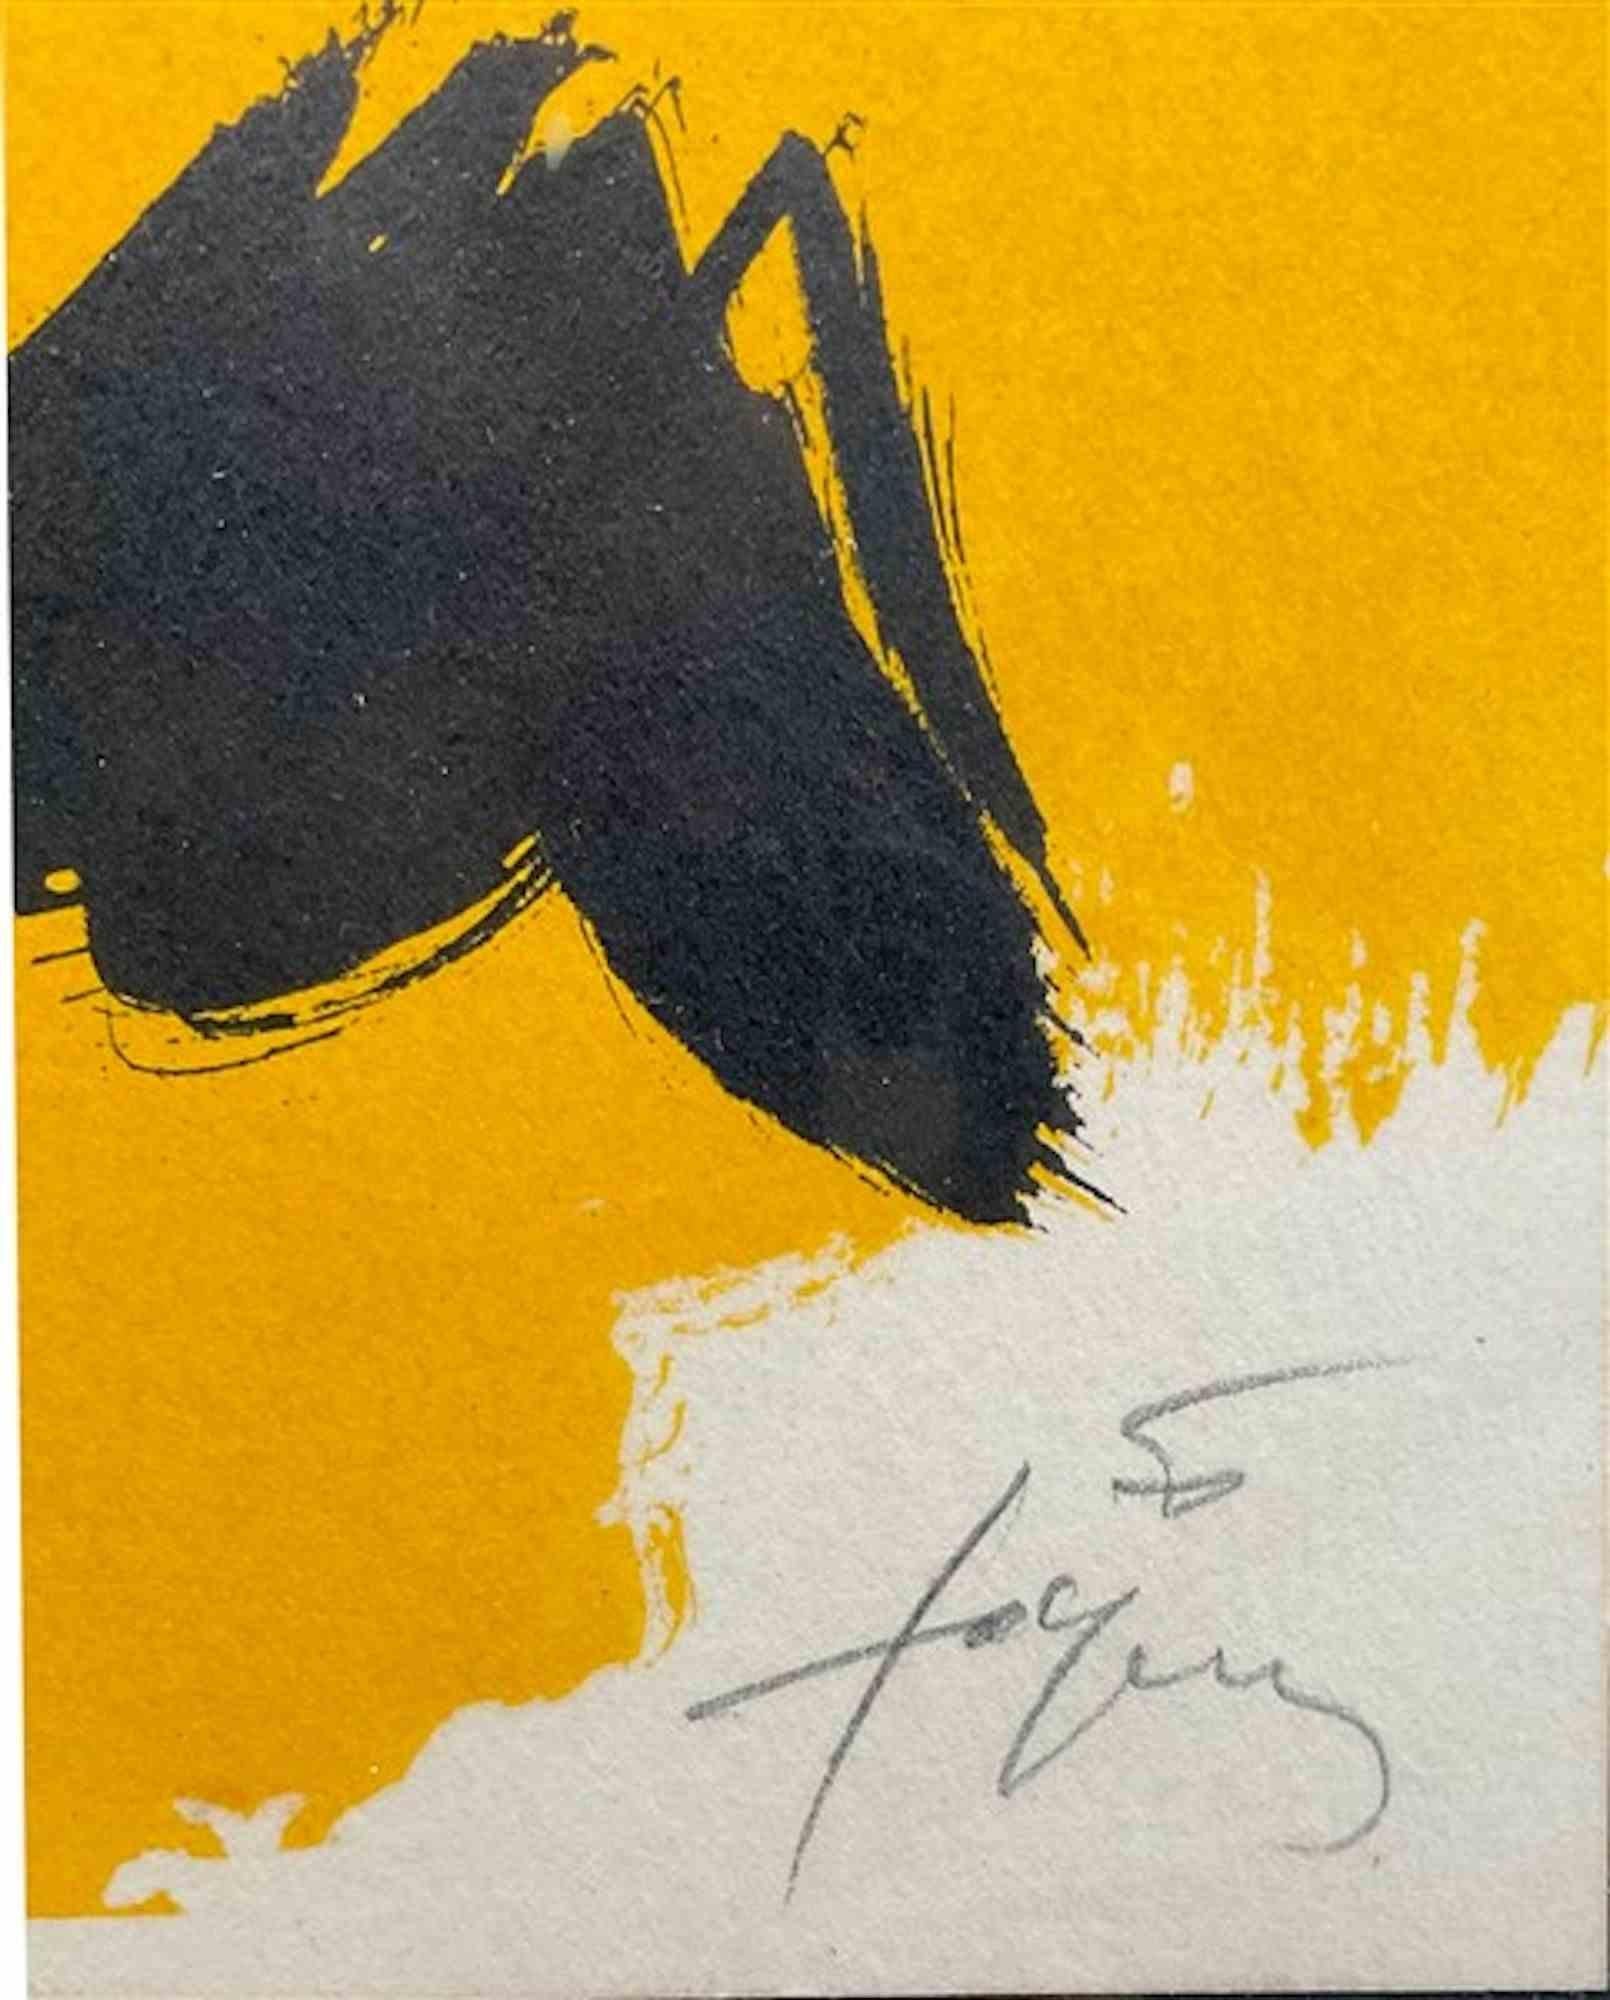 Catalunya -  Lithograph by Antoni Tapies - 1974 - Print by Antoni Tàpies